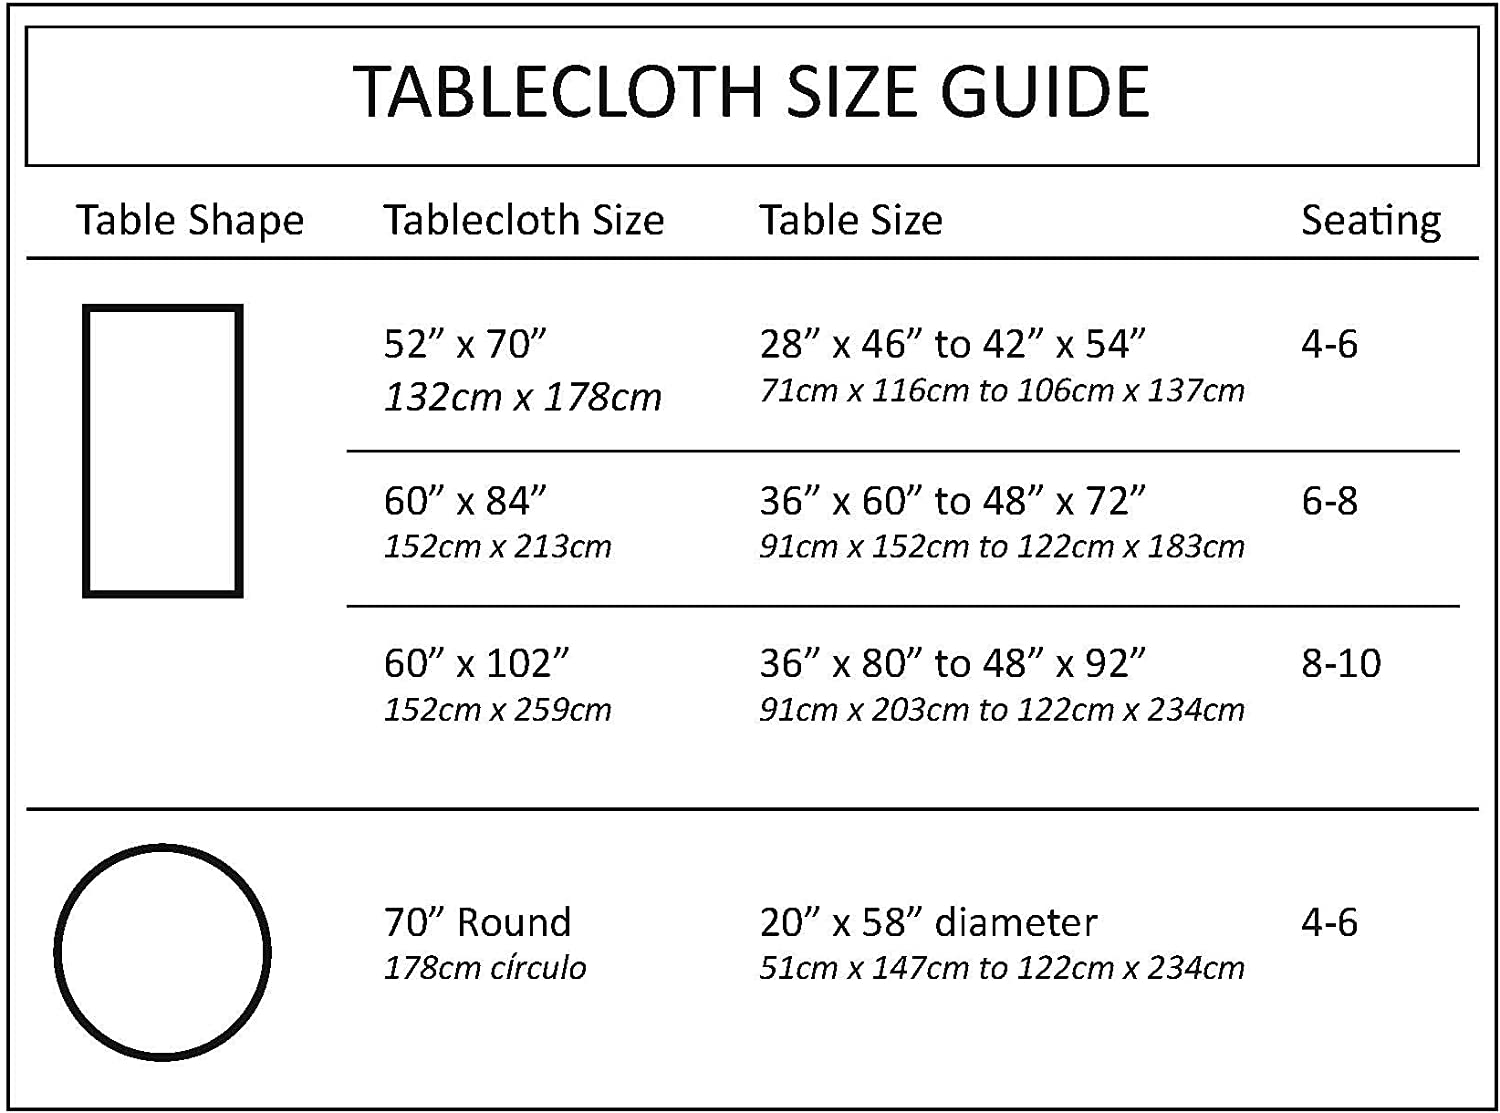 Kashi Home Glitter Fabric Tablecloth - Linen Universe Co.